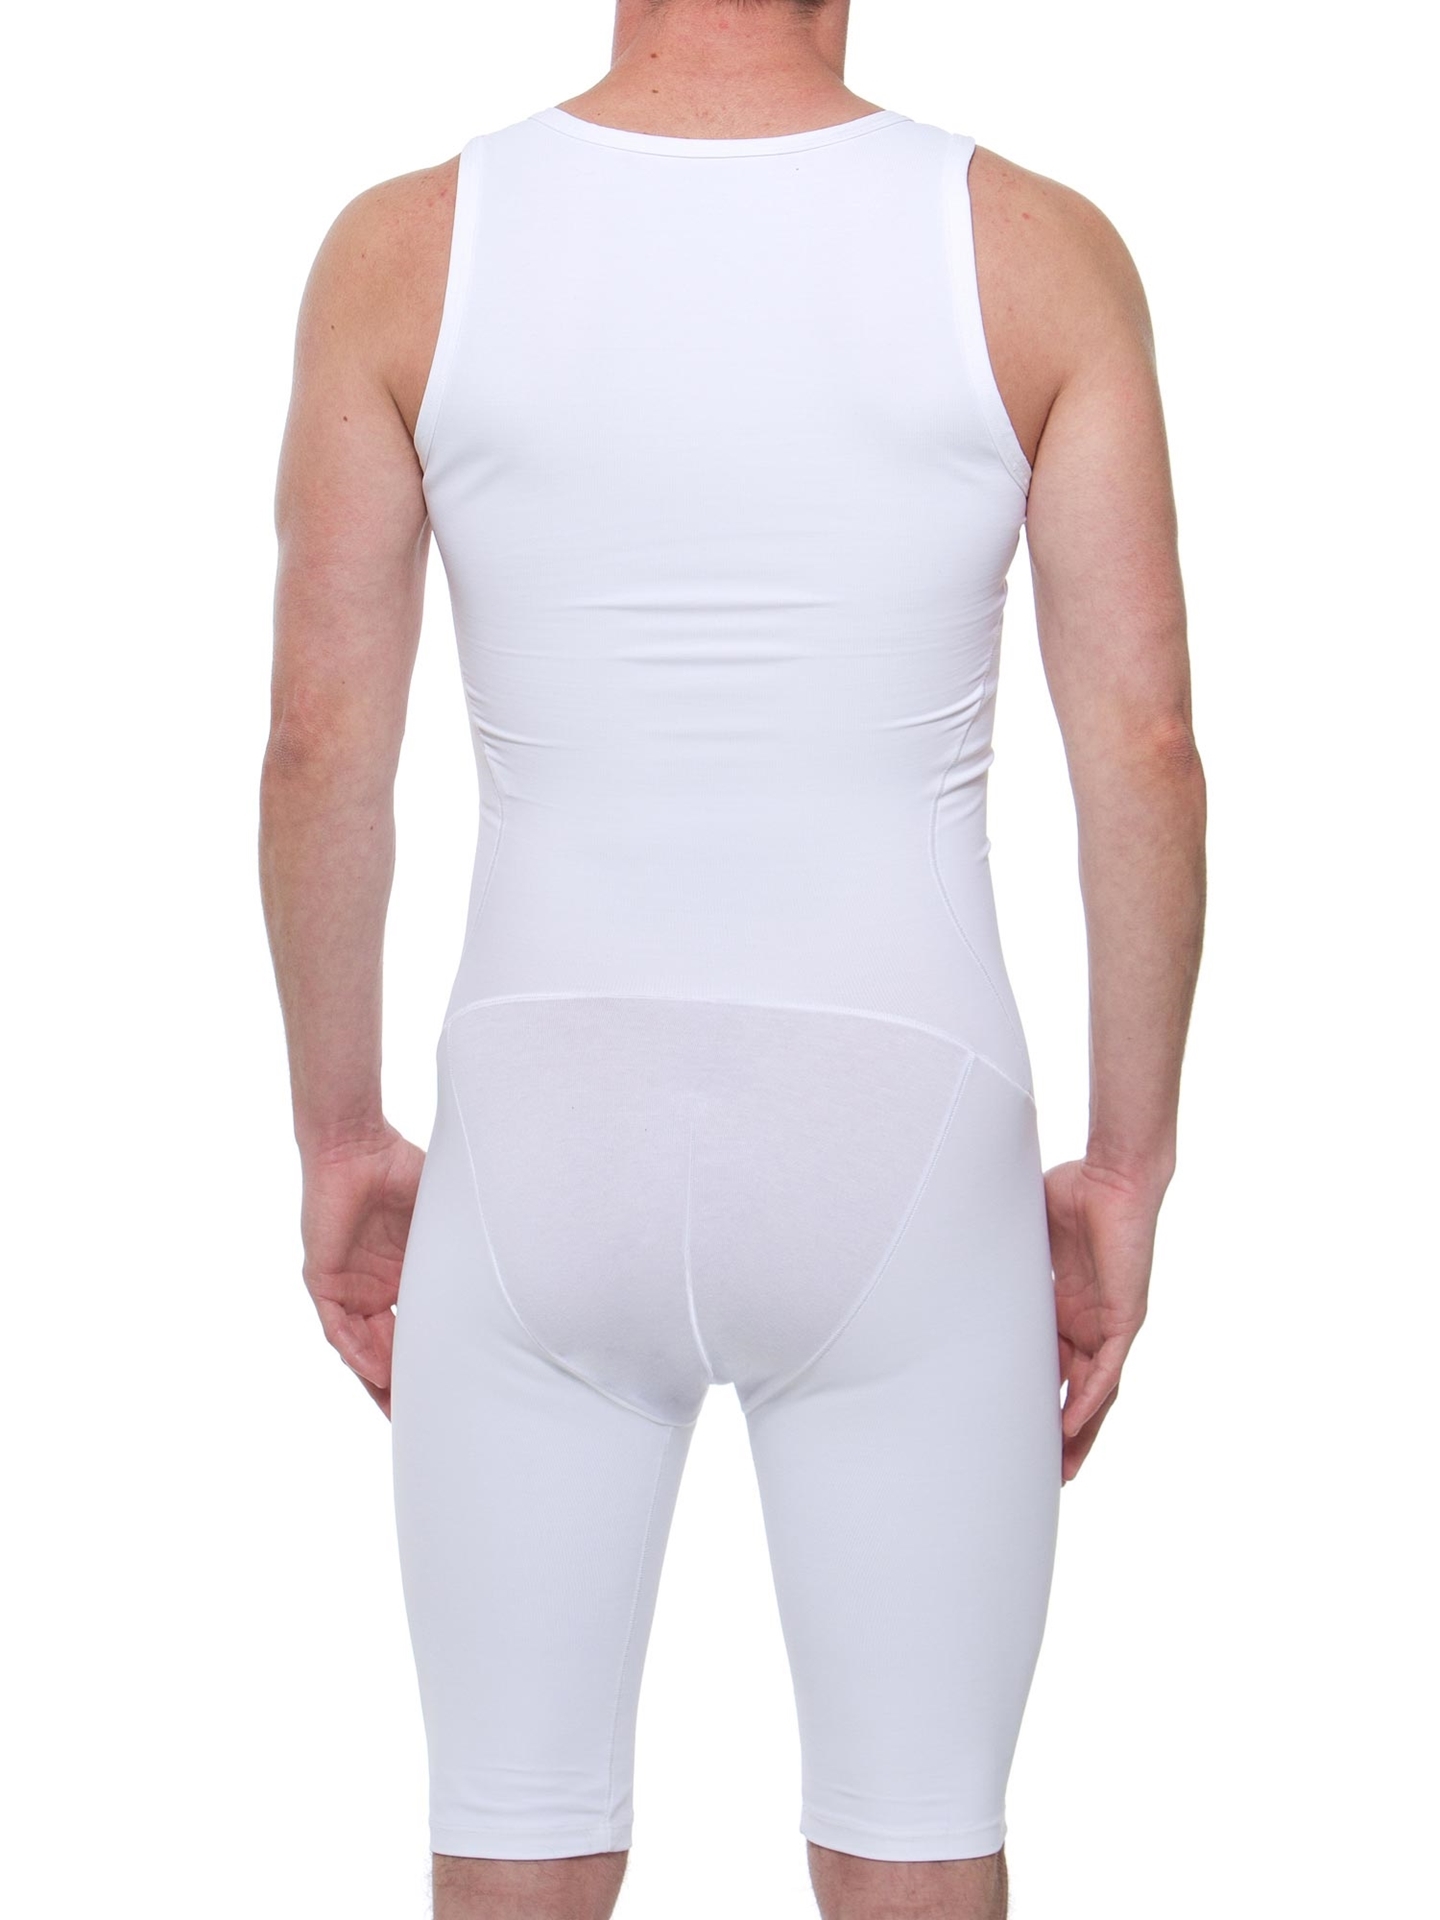 Underworks FTM Compression Bodysuit Girdle - No Rear Zipper. FTM Chest  Binders for Trans Men by Underworks